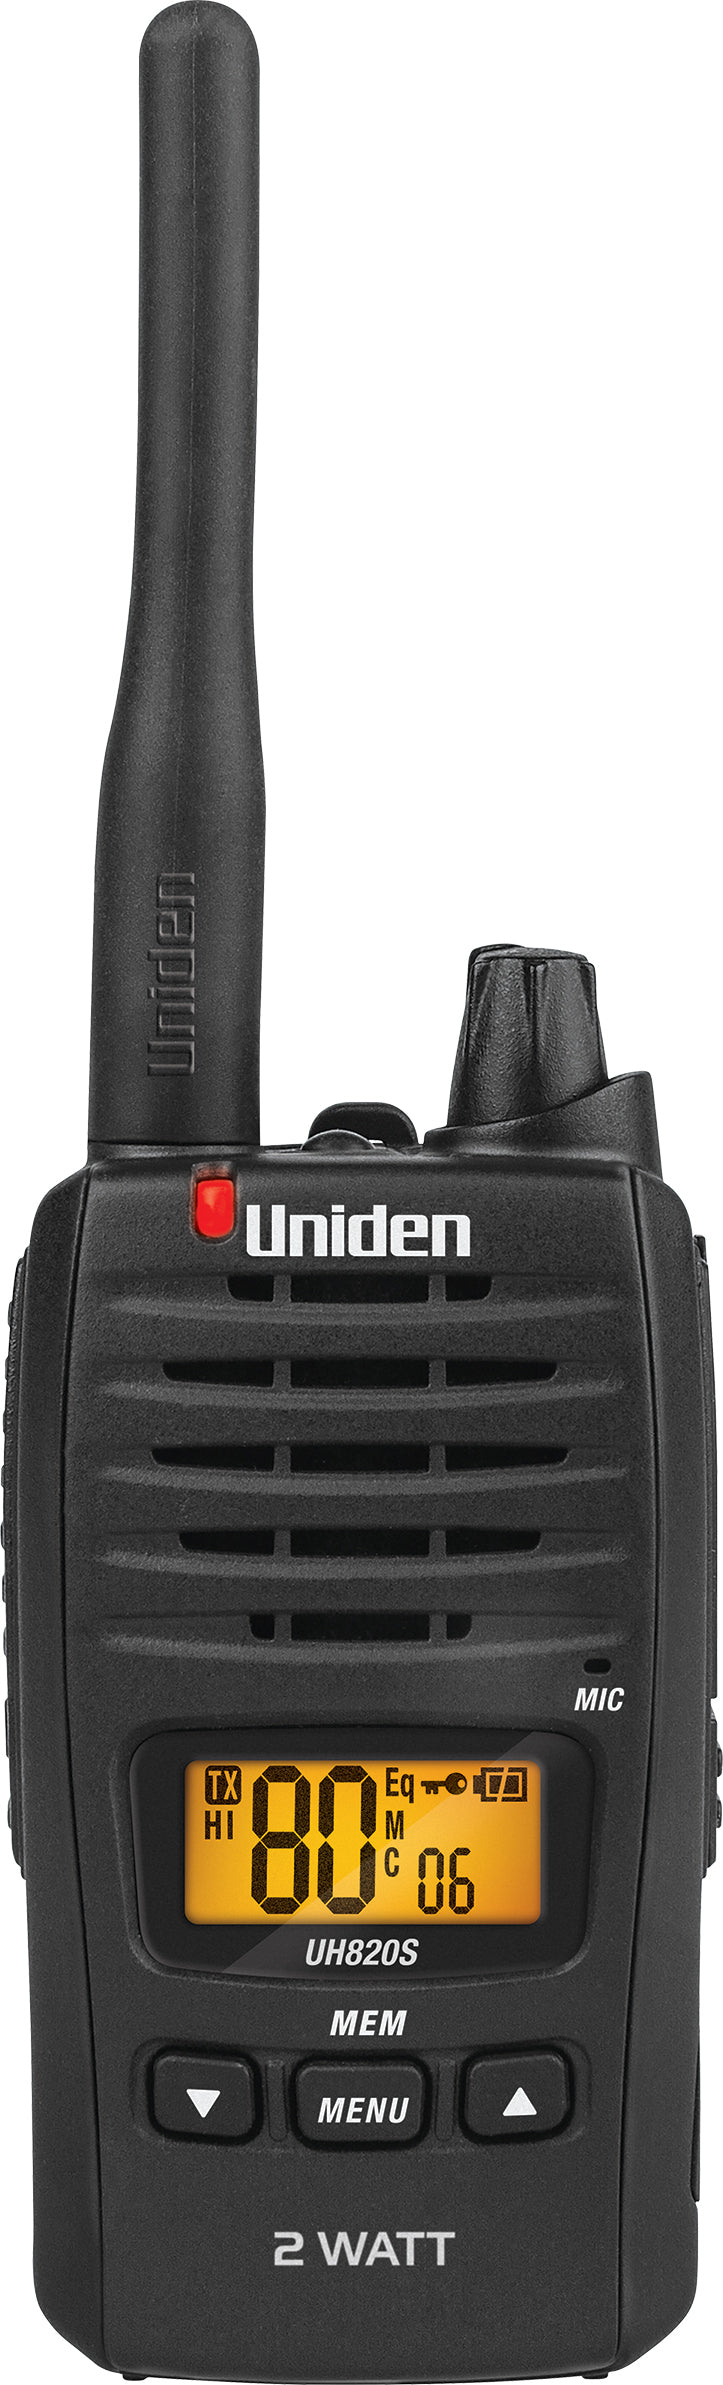 Uniden 2 Watt UHF820S Handheld Radio